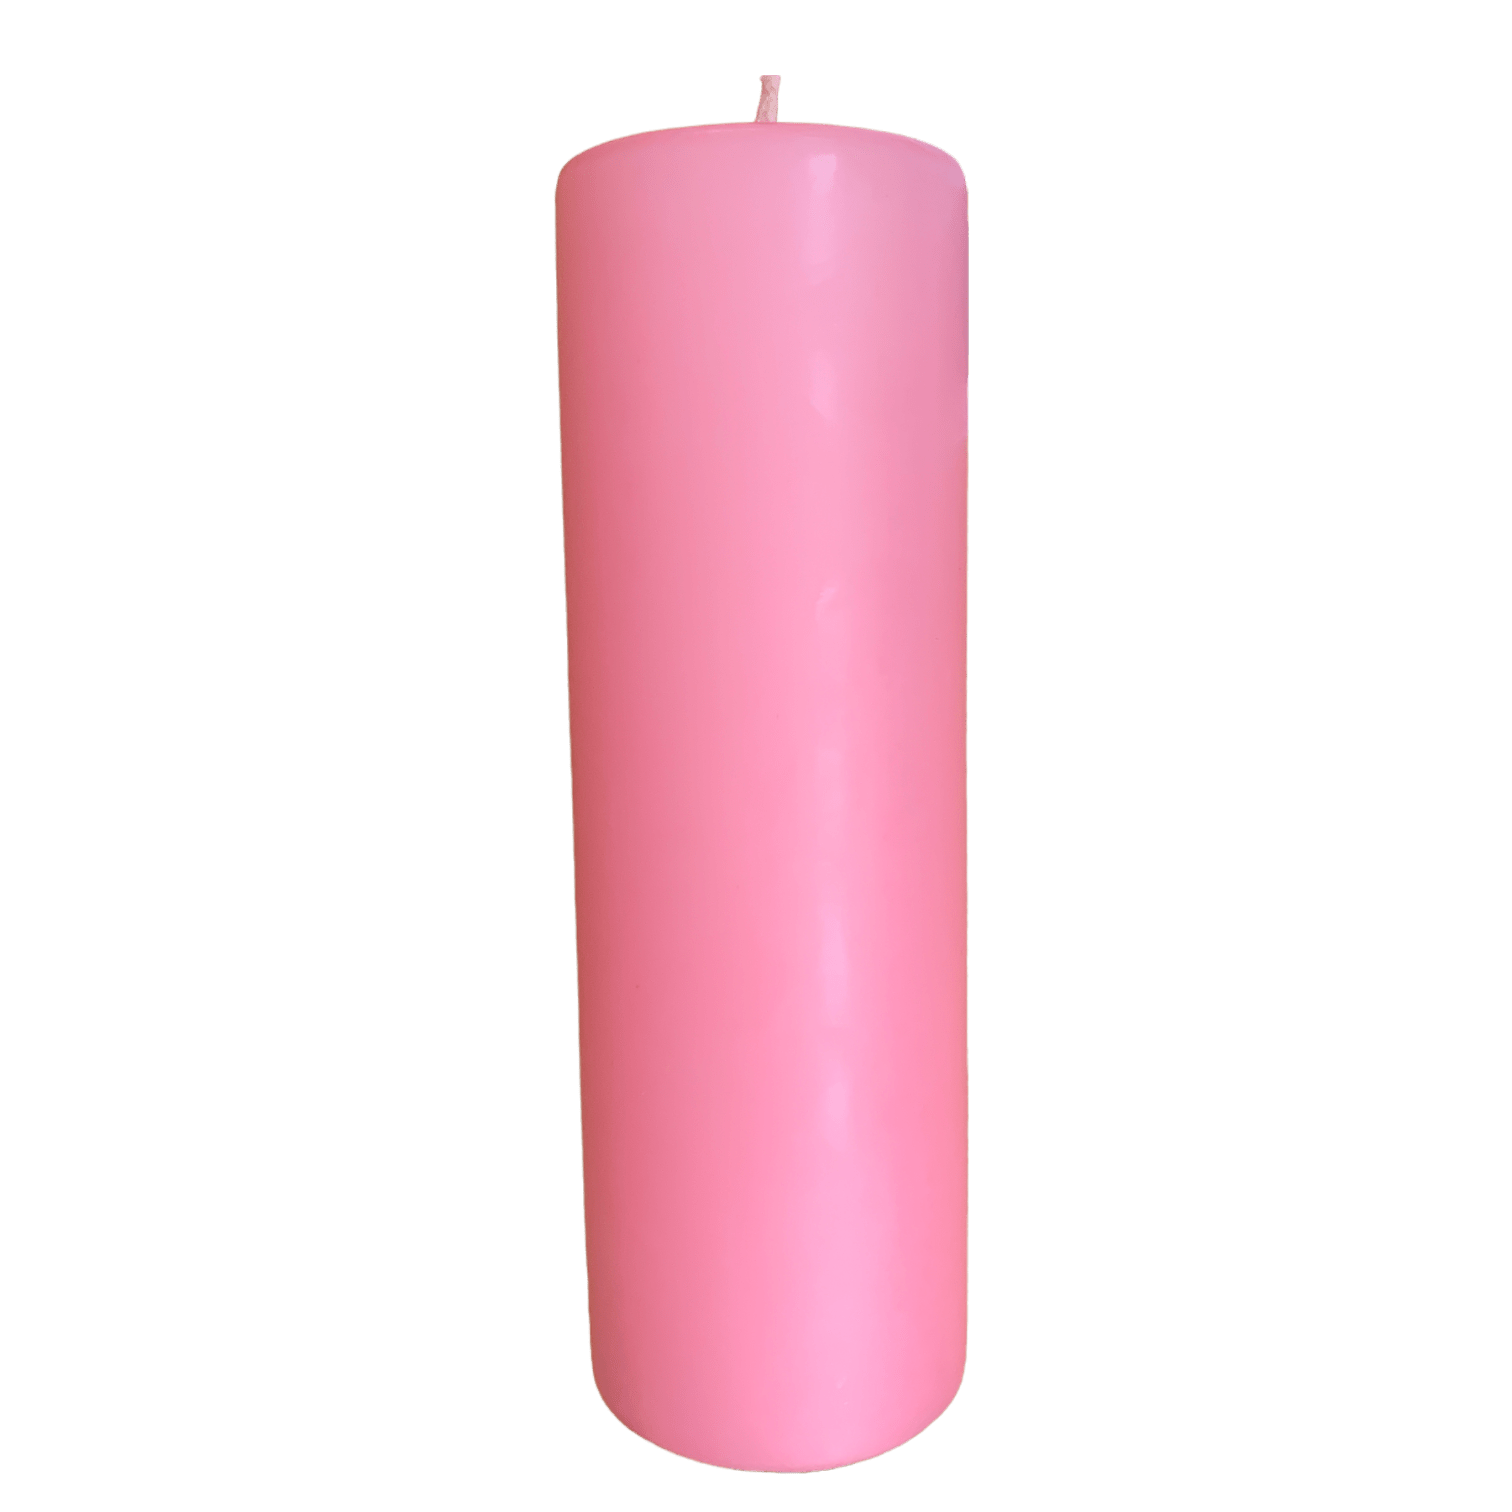 Soft Pink Pillar Candle 200mm